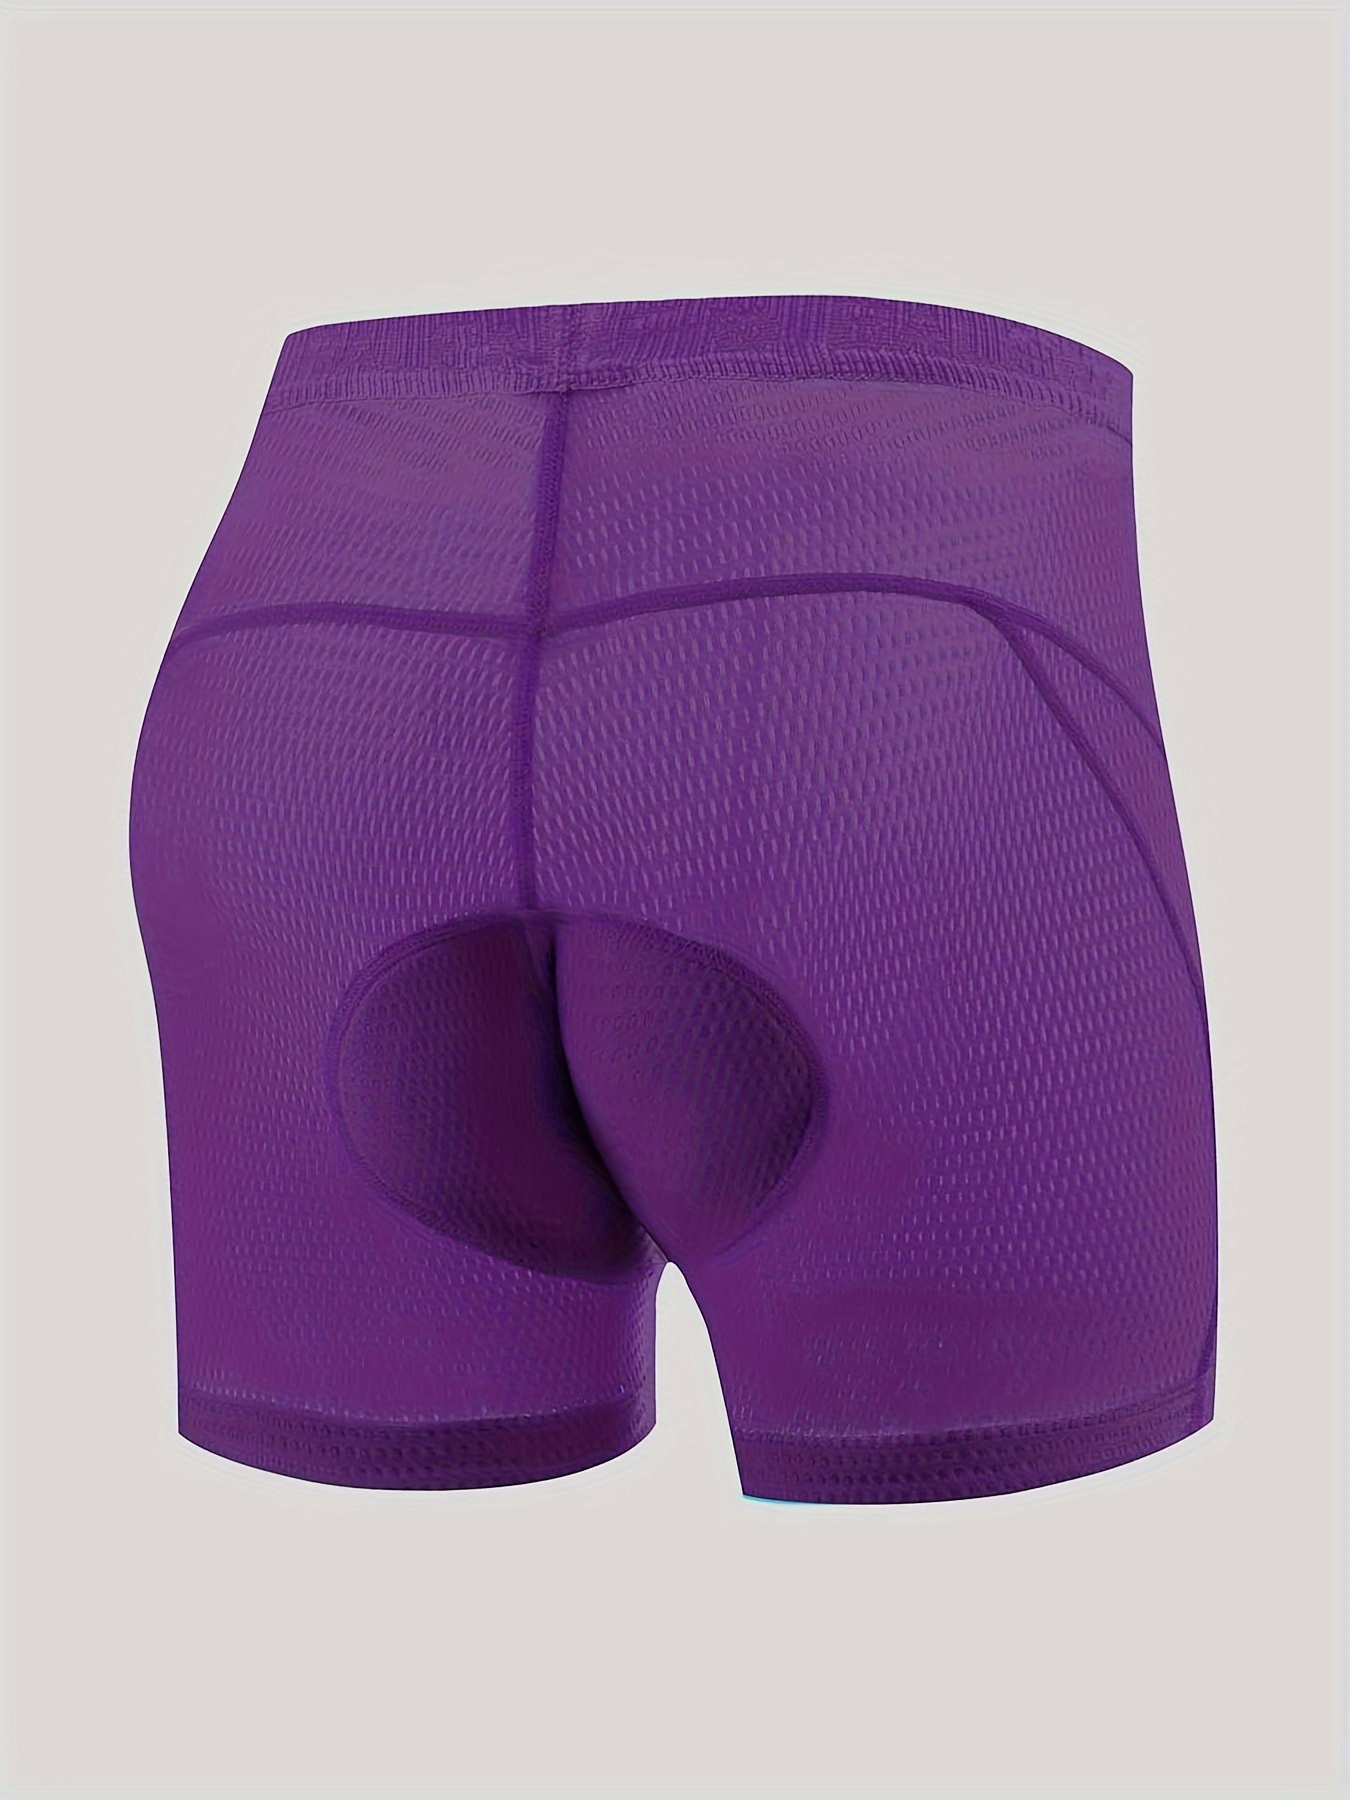 Should You Buy? BALEAF Padded Bike Shorts Underwear 